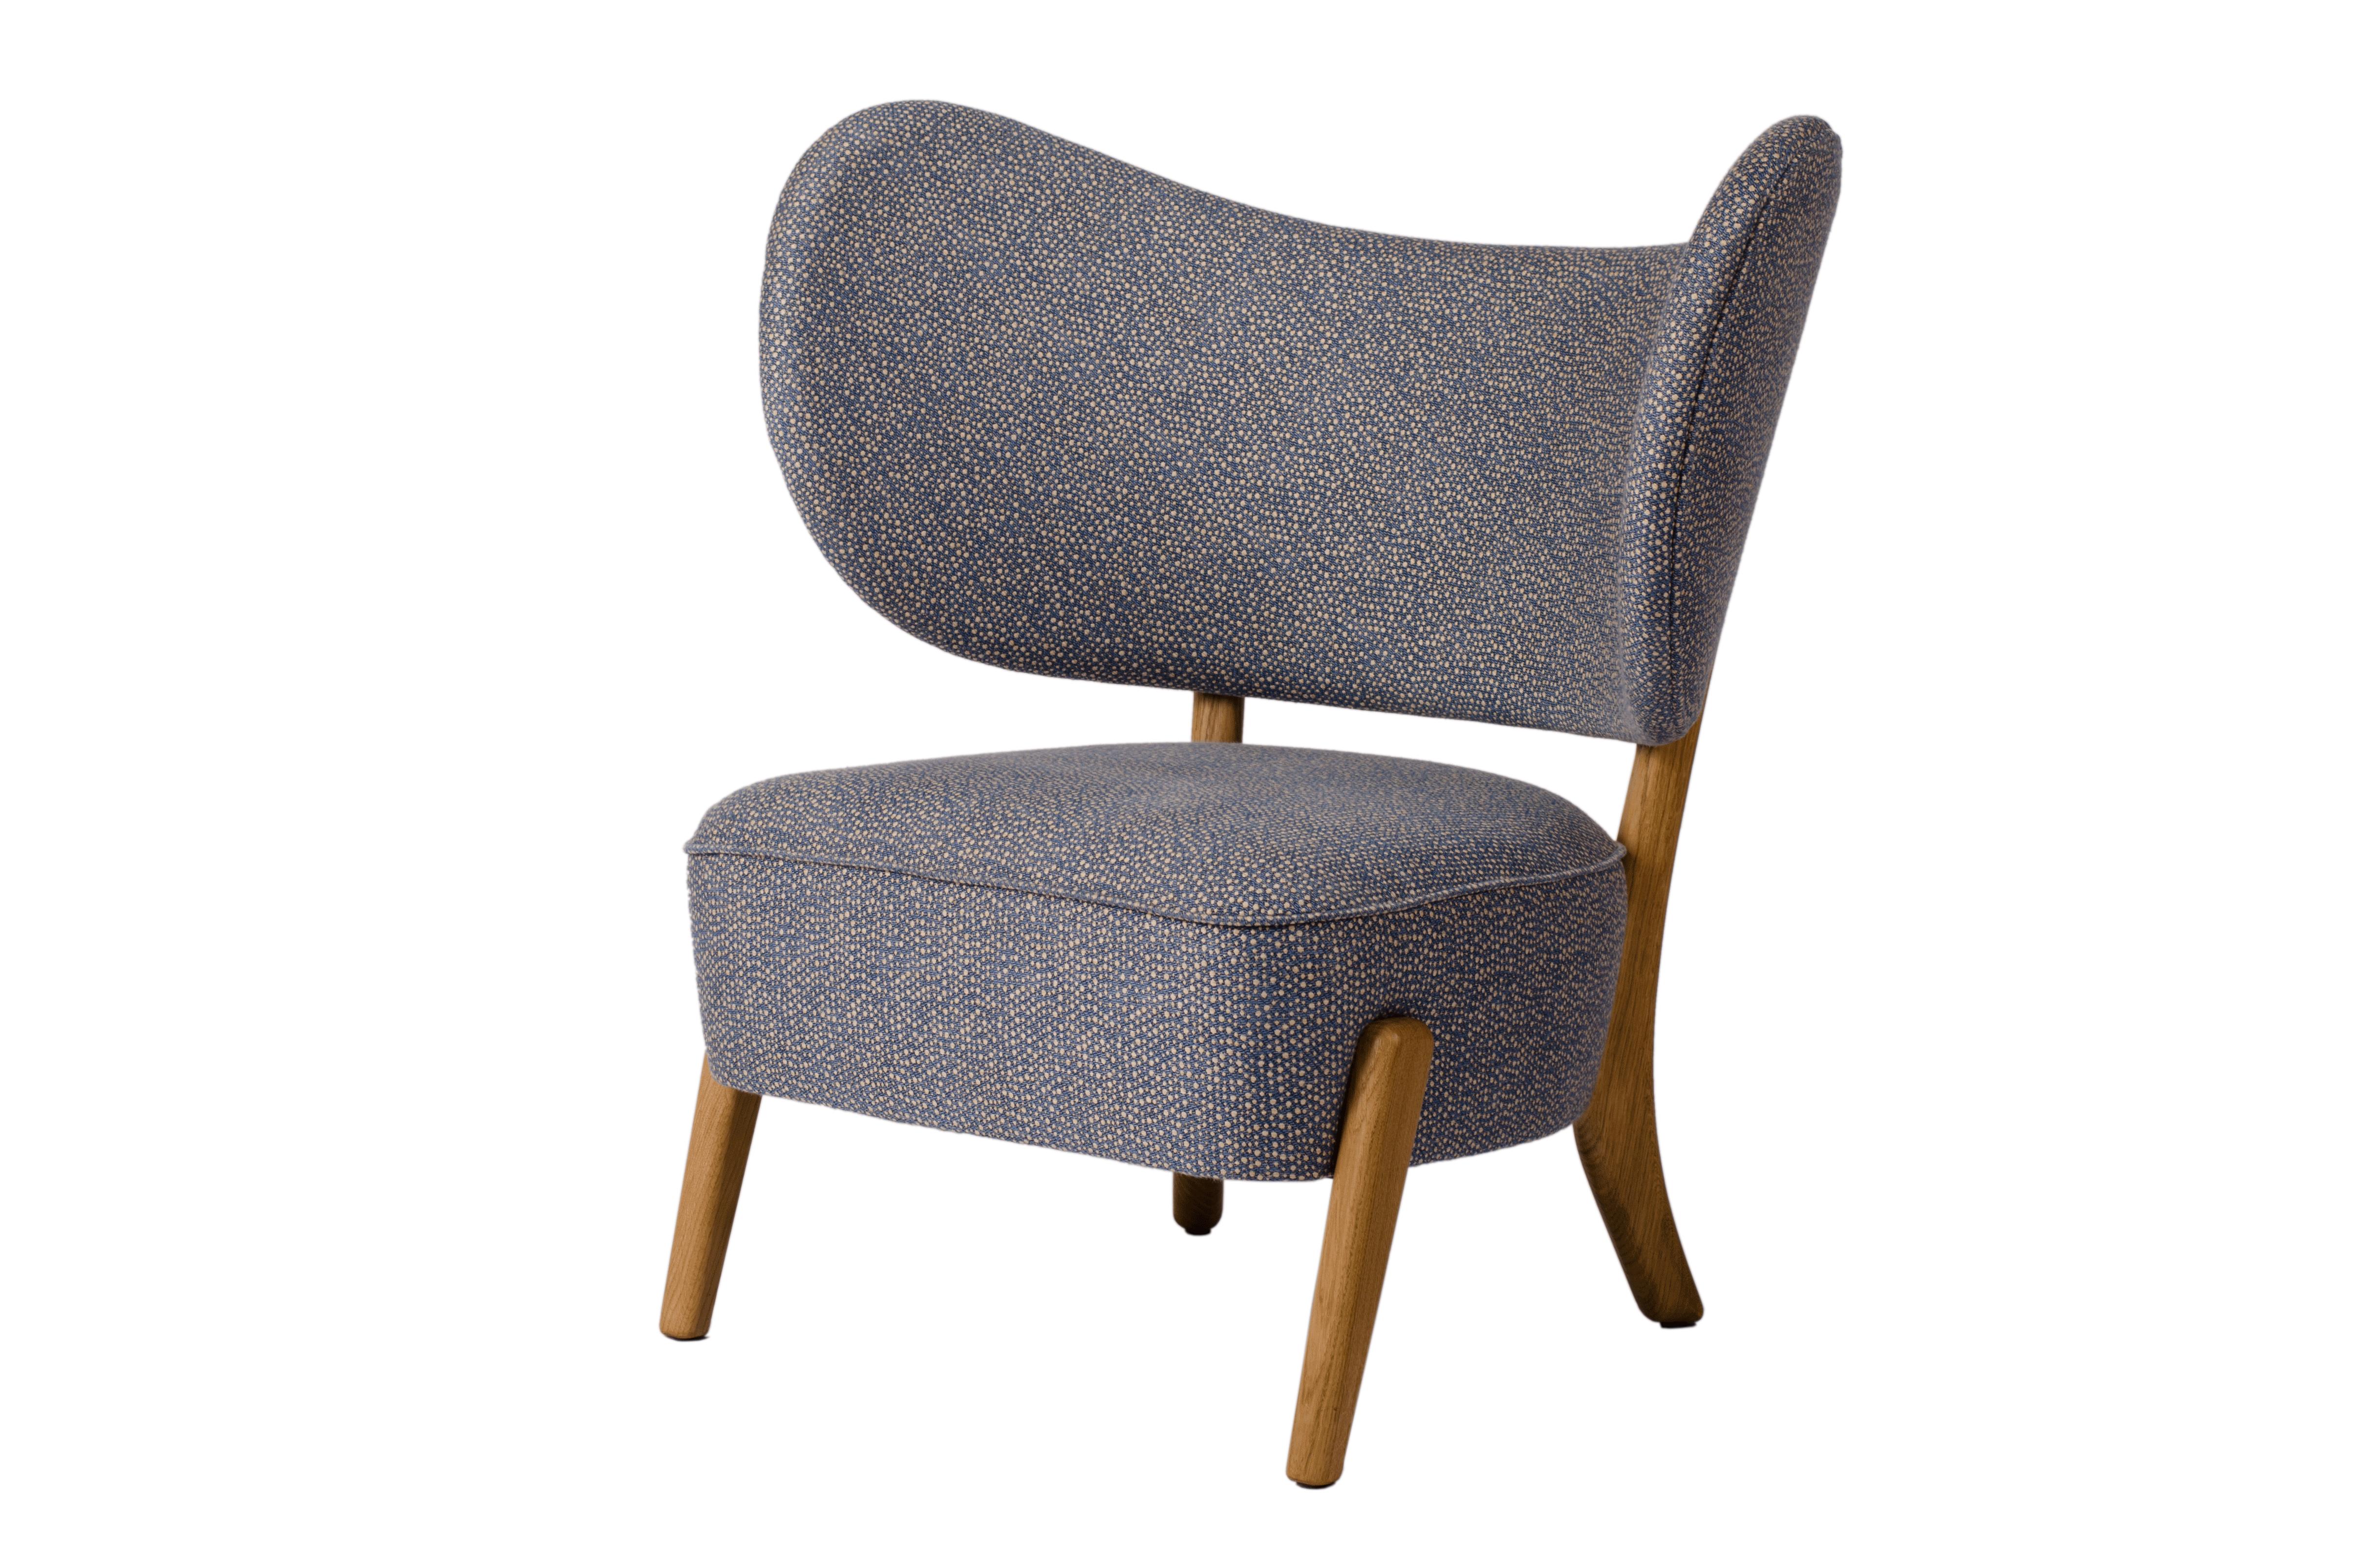 JENNIFER SHORTO / Kongaline & Seafoam TMBO Lounge Chair by Mazo Design
Dimensions: W 90 x D 68.5 x H 87 cm
Materials: Oak, Textile
Also Available: ROMO/Linara, DAW/Royal, KVADRAT/Remix, KVADRAT/Hallingdal & Fiord, BUTE/Storr,